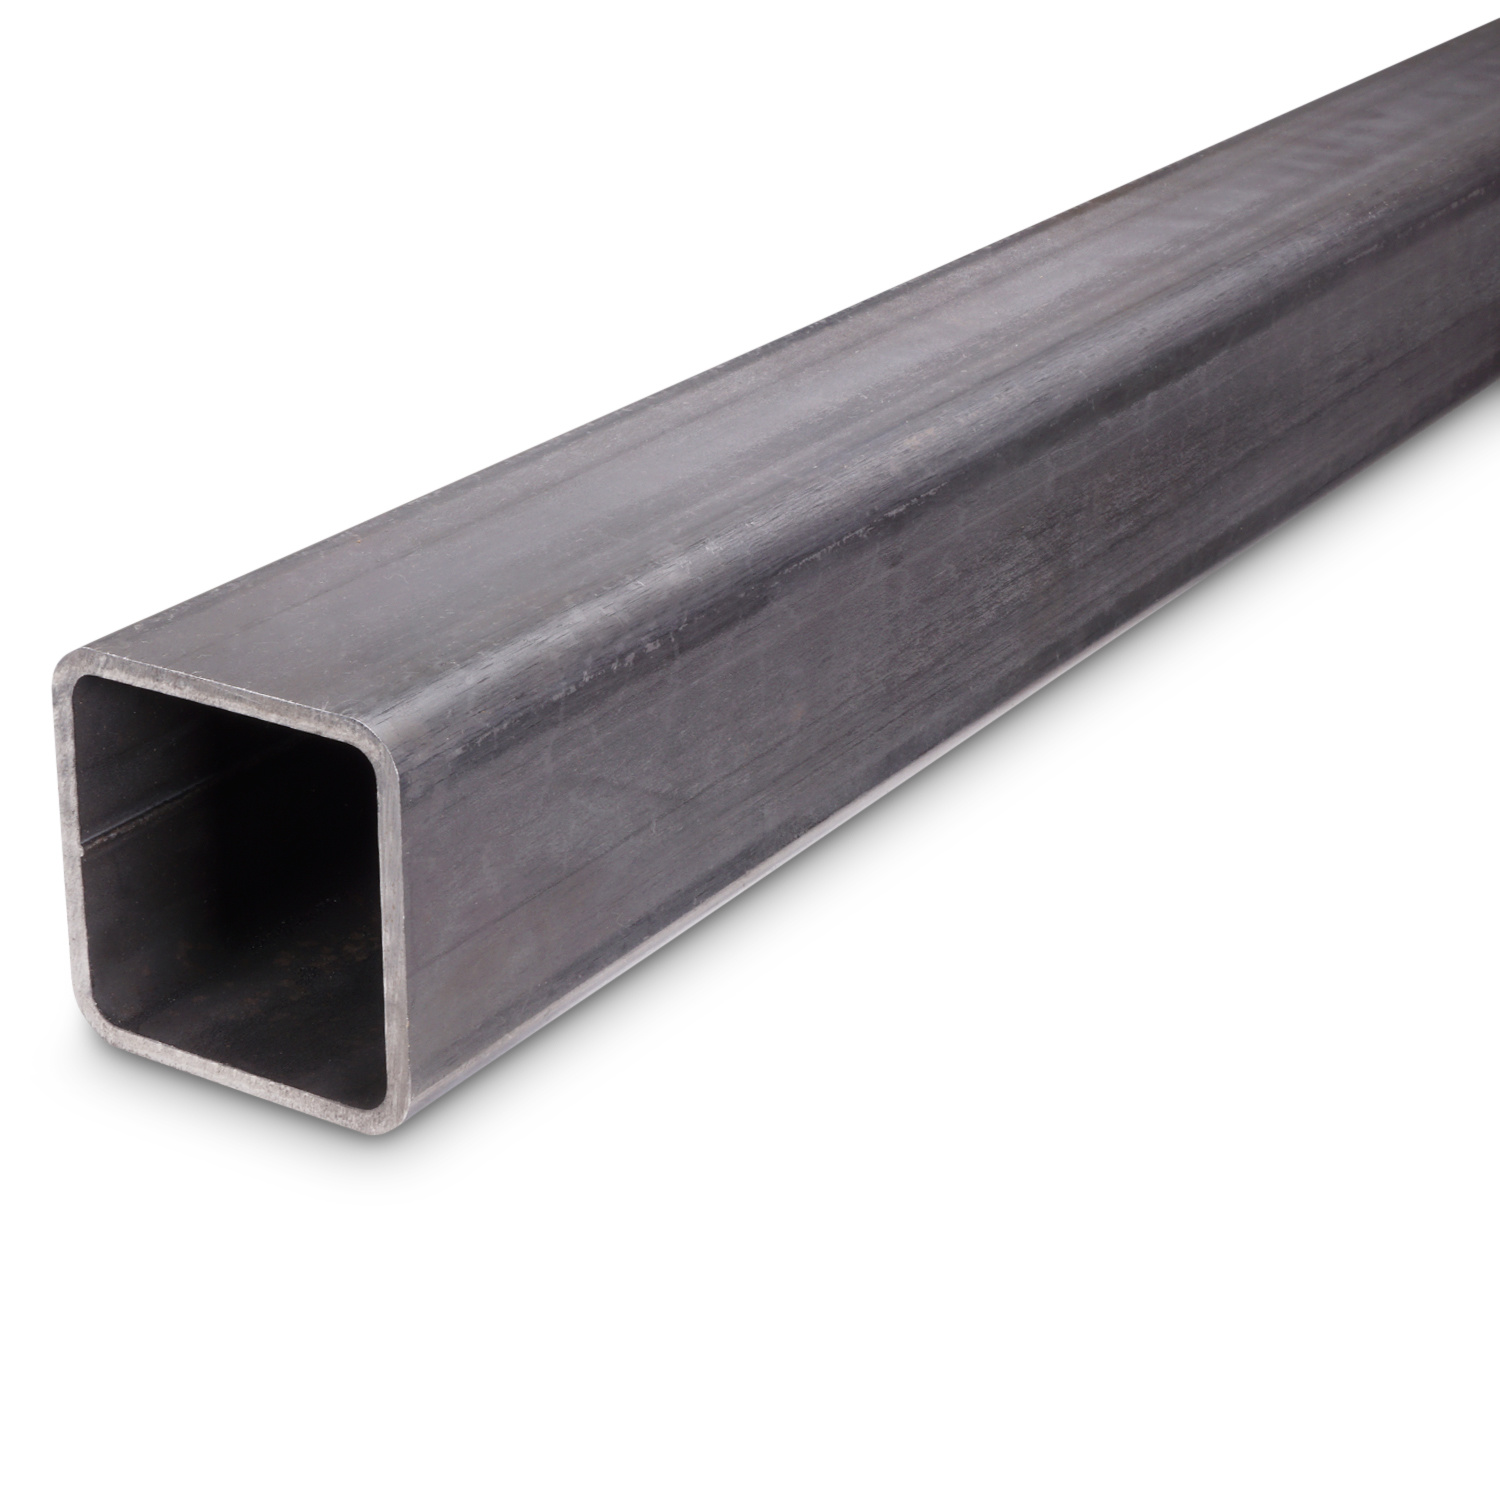  Koker staal - vierkante buis kokerprofiel KGV staal - S235JR - 50x50x5 MM